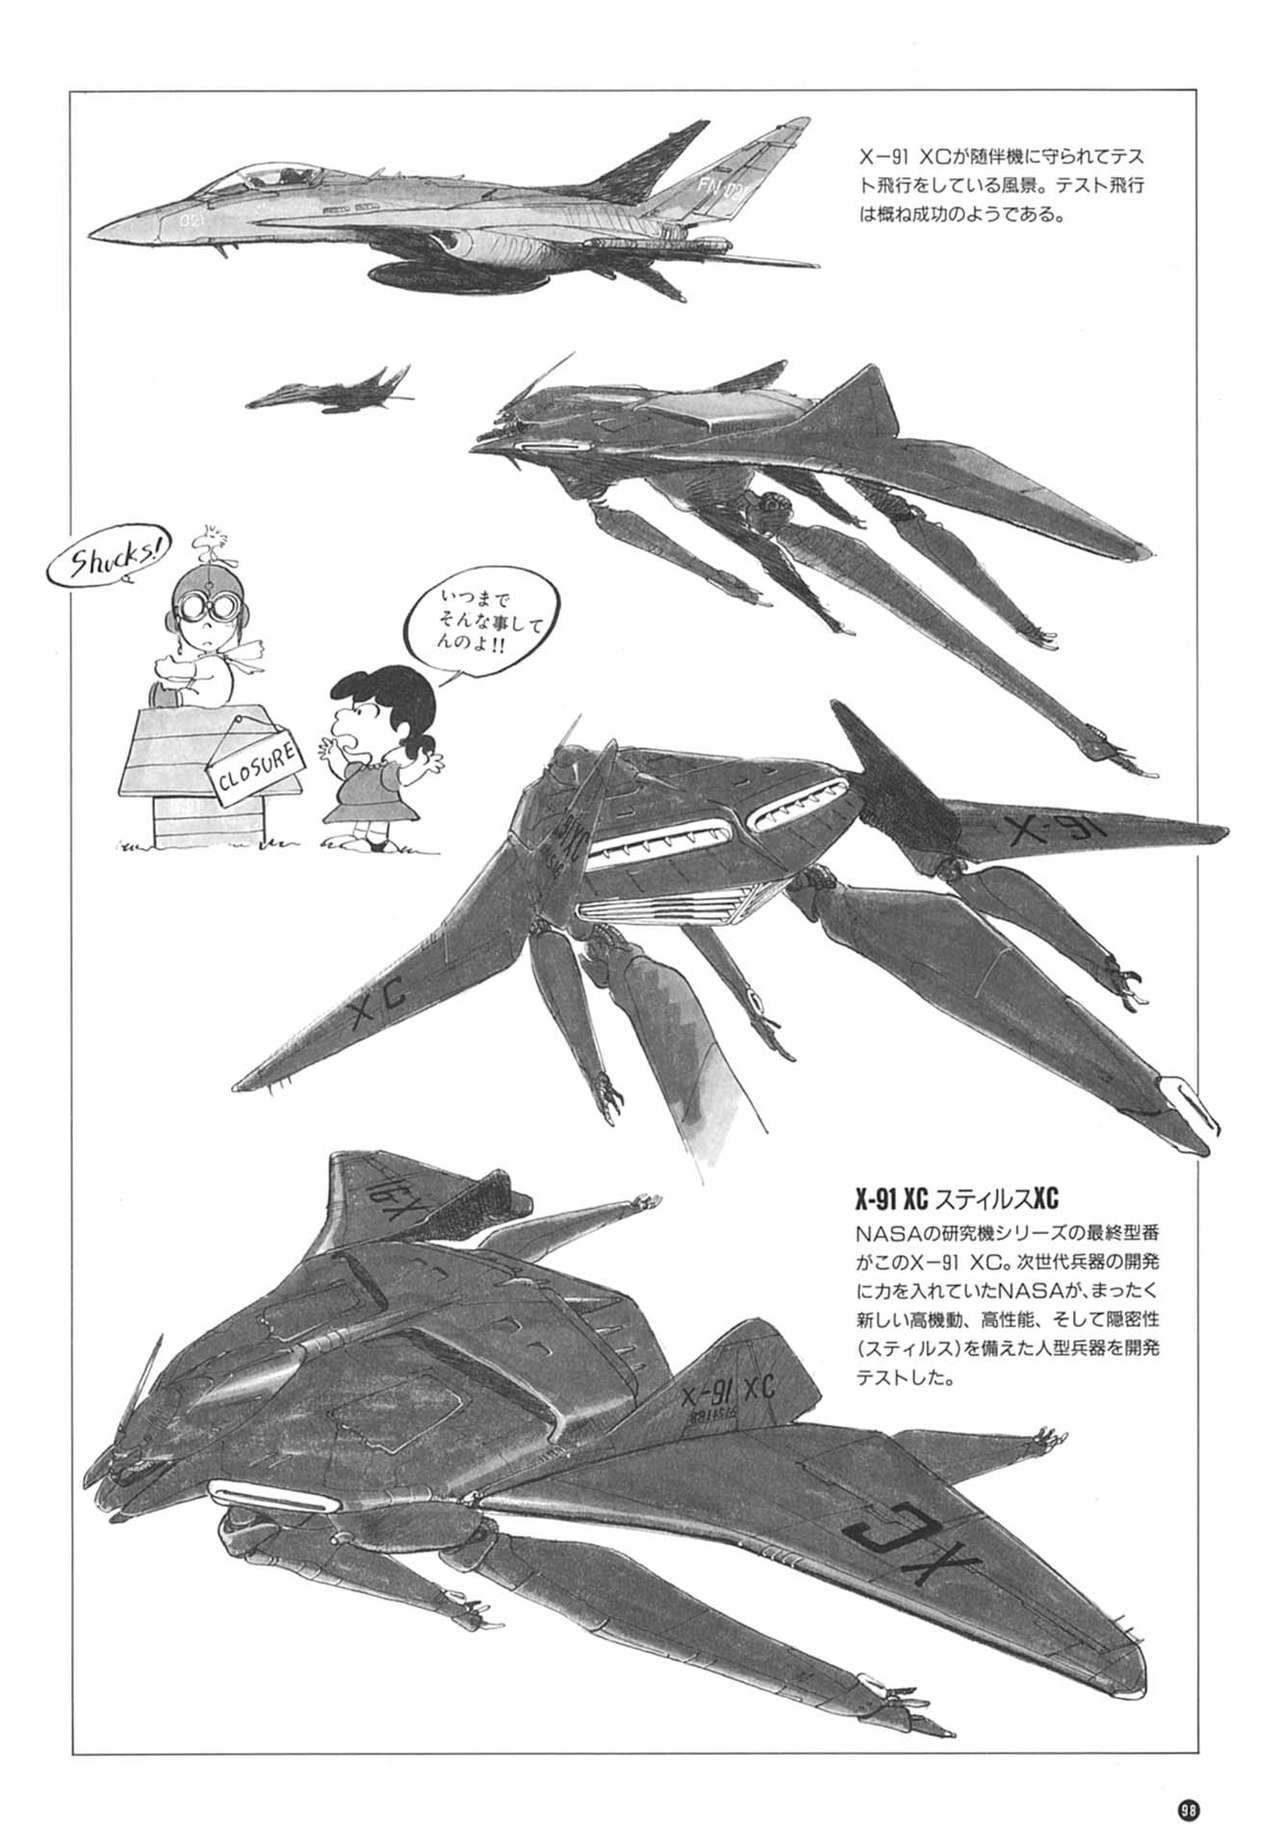 [Kazuhisa Kondo] Kazuhisa Kondo 2D & 3D Works - Go Ahead - From Mobile Suit Gundam to Original Mechanism 97